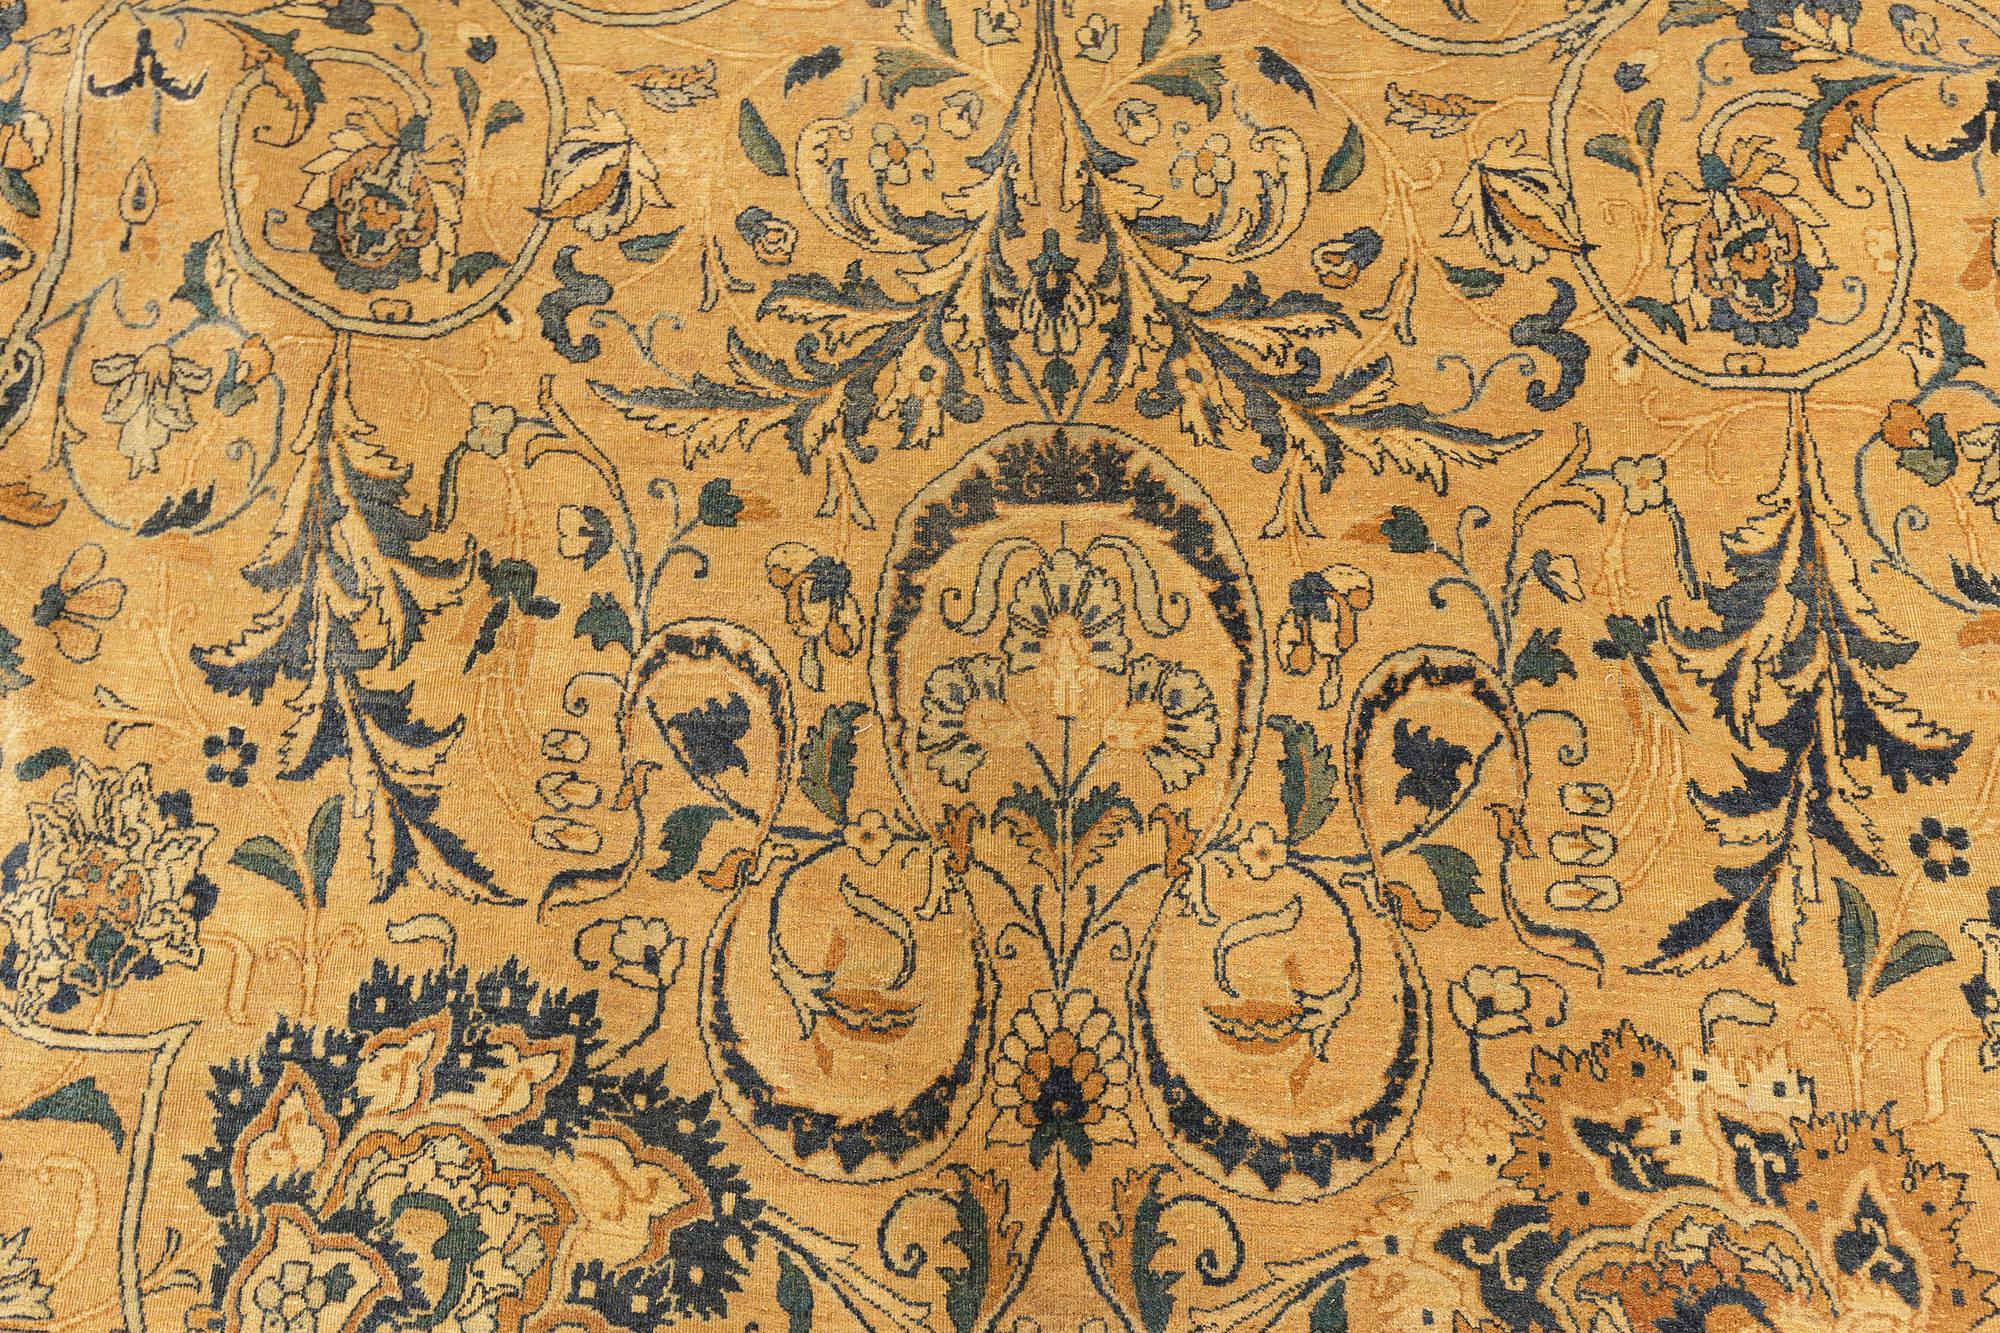 Oversized antique Persian Kirman handmade wool carpet
Size: 14'7